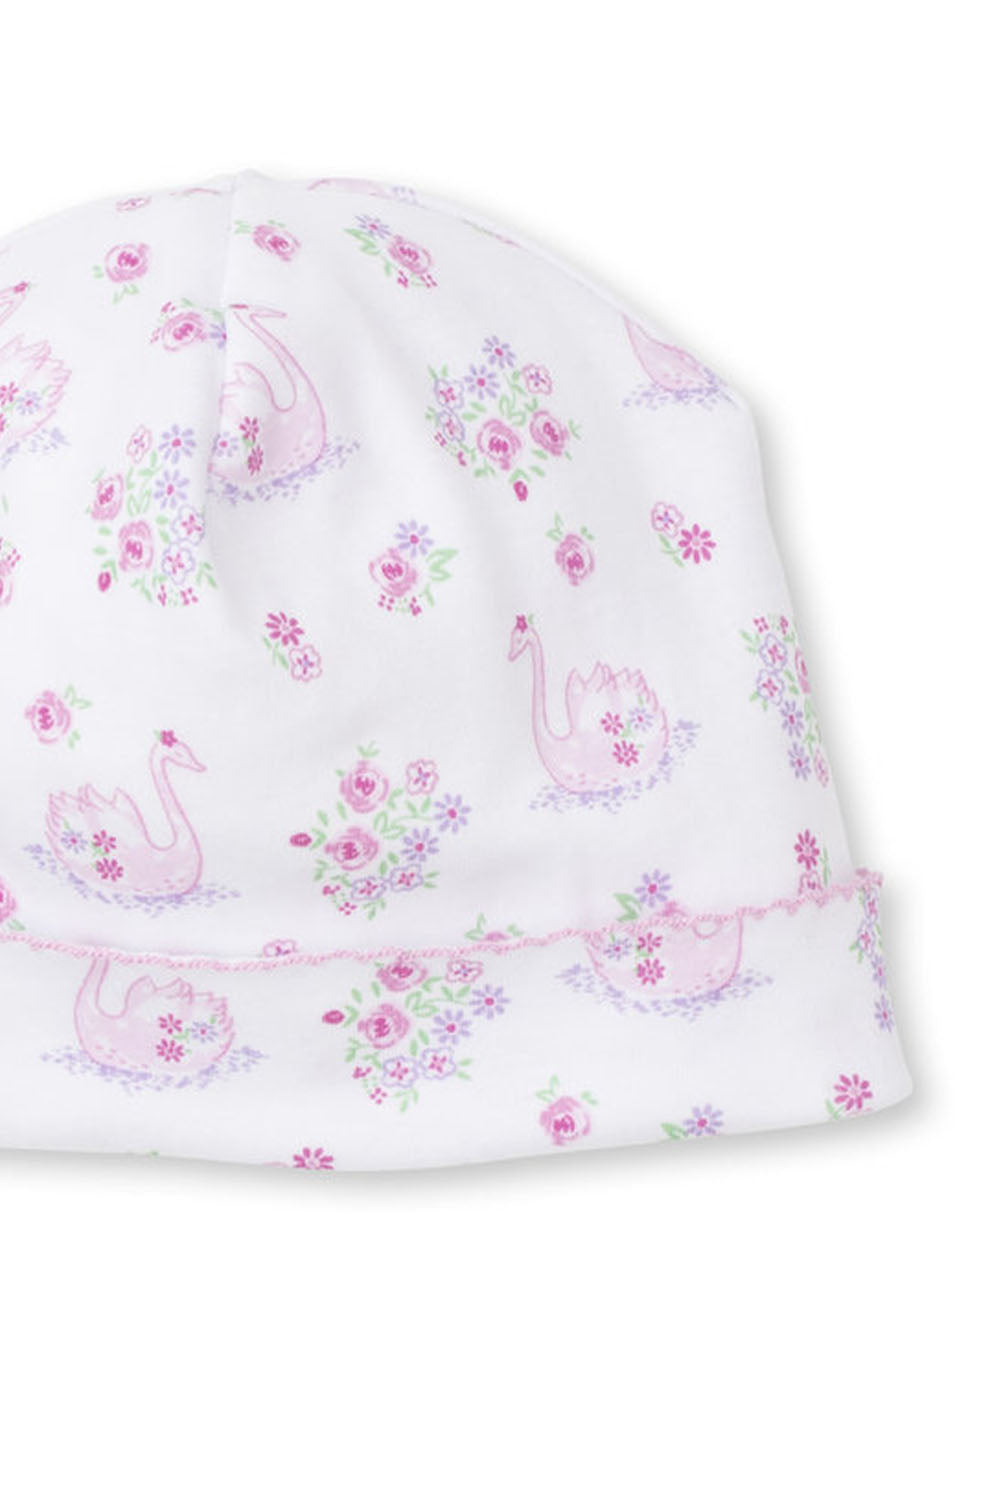 Swan Blossom Hat for Girls Swan Blossom Hat for Girls Swan Blossom Hat for Girls Maison7